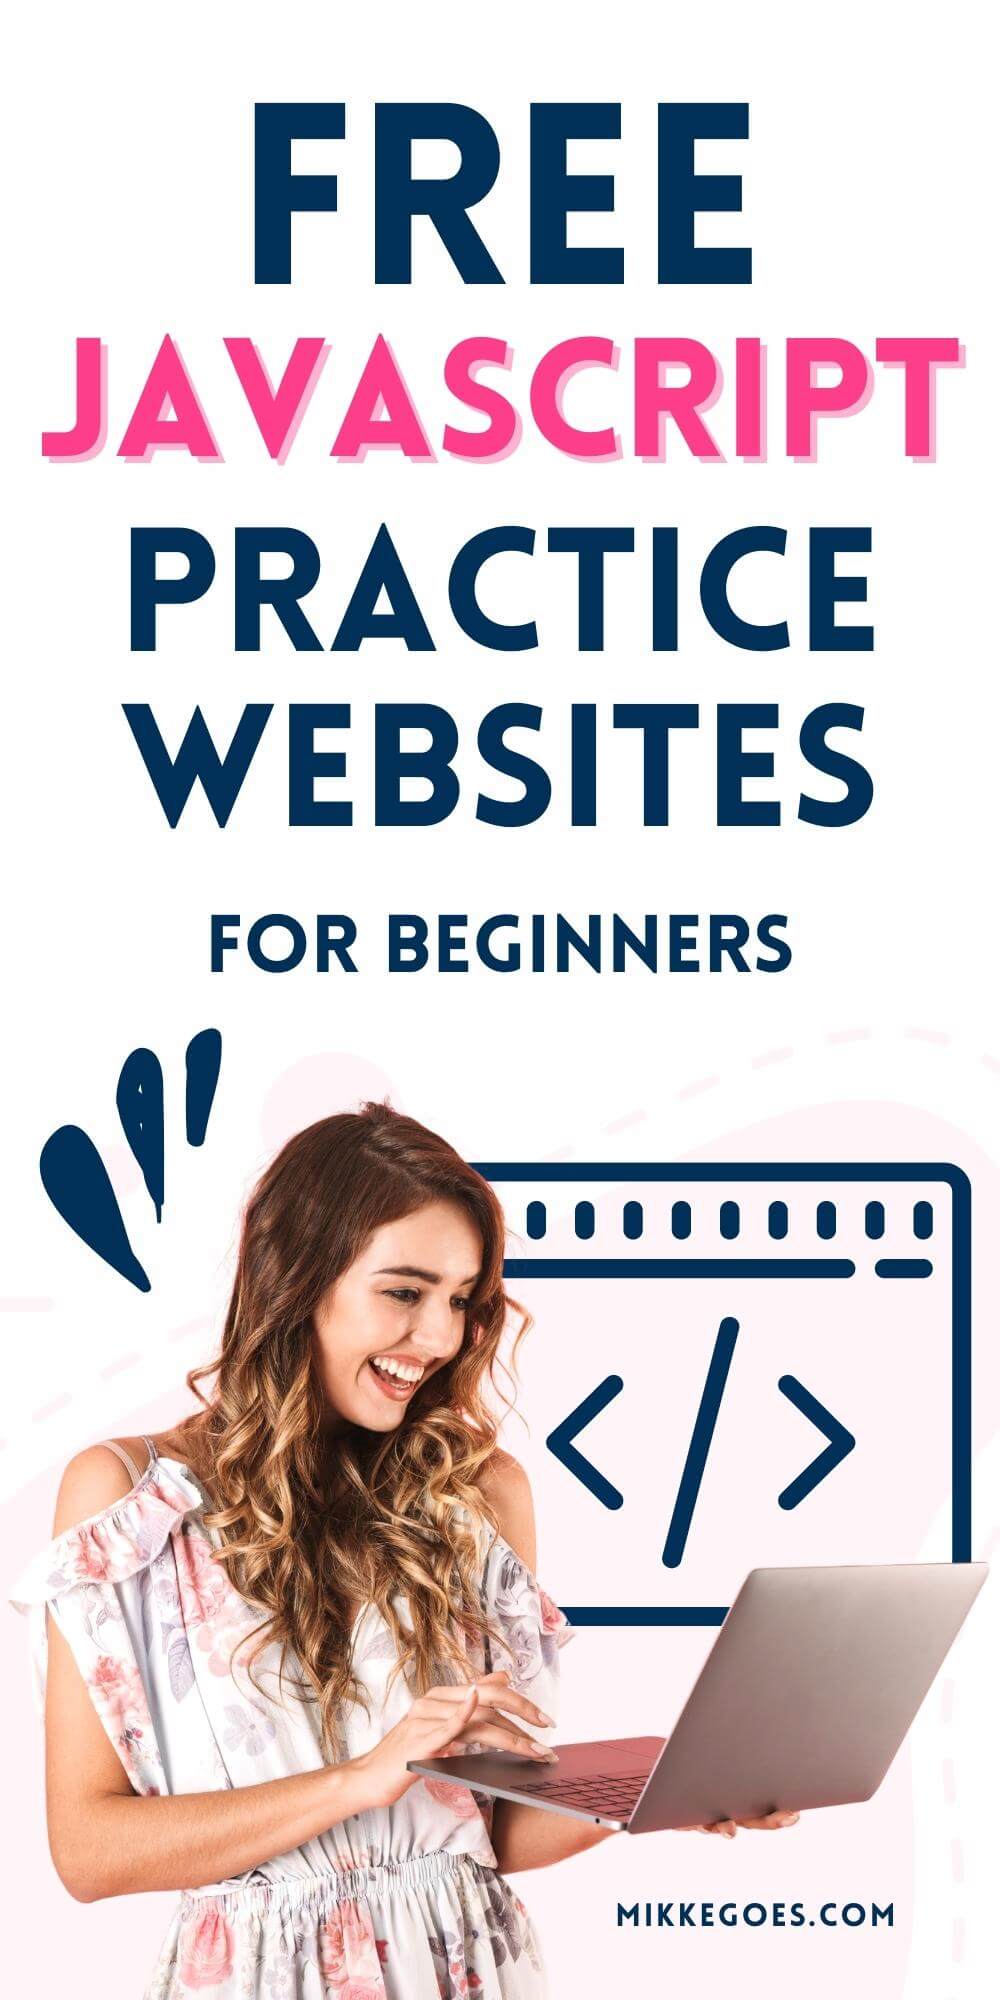 Free JavaScript practice websites for beginners